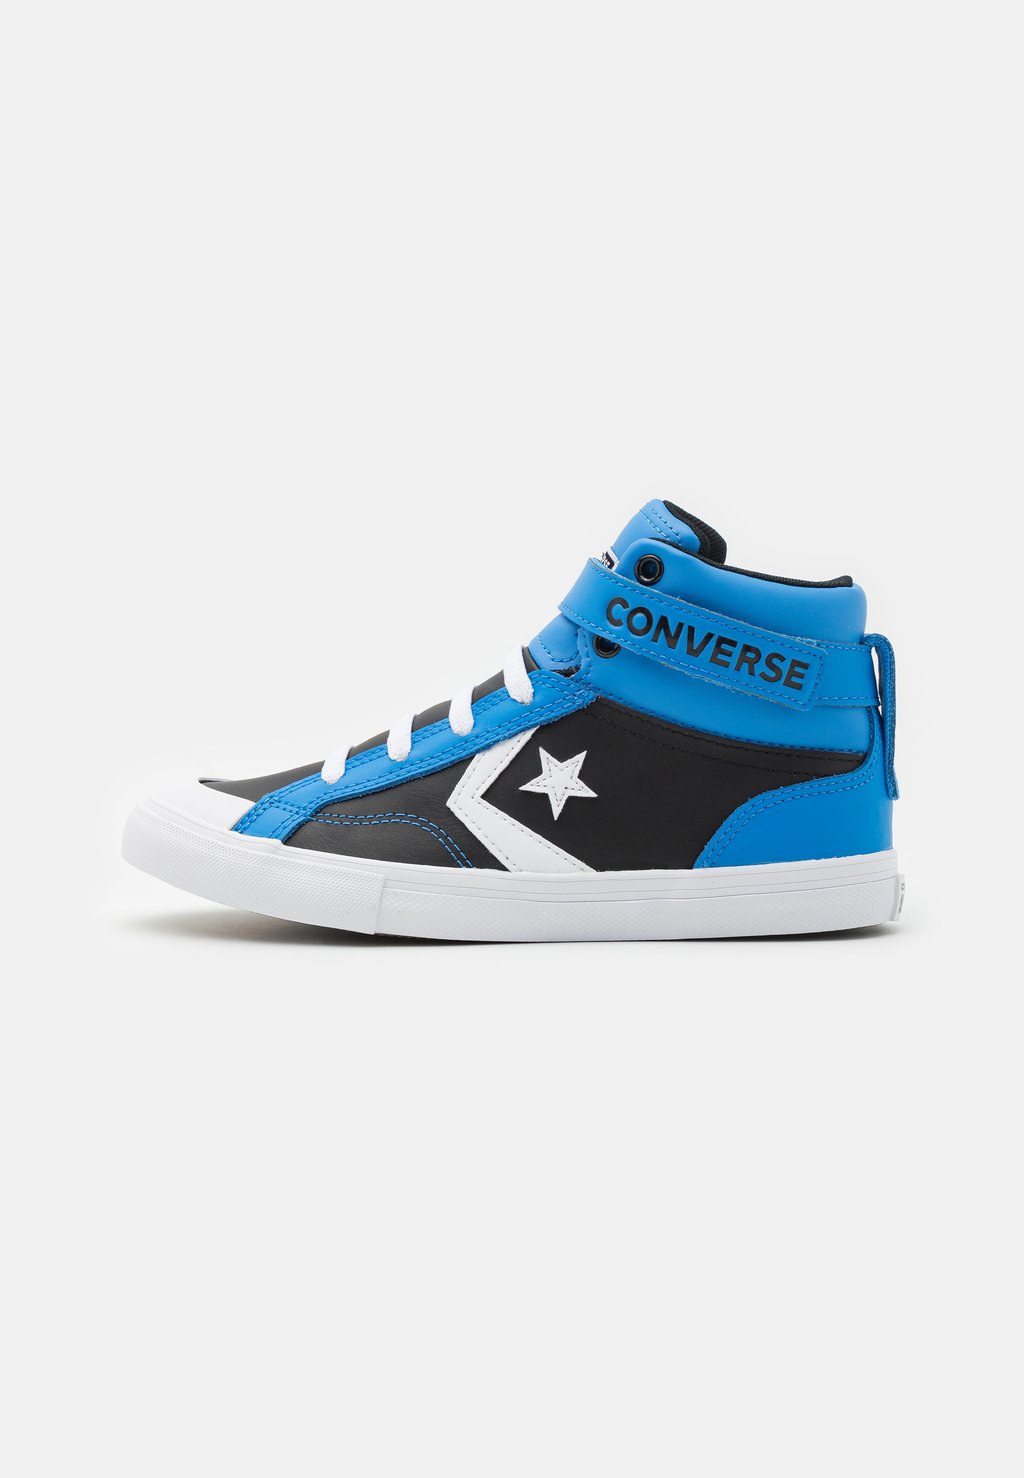 Высокие кеды Pro Blaze Unisex Converse, цвет blue slushy/black/white